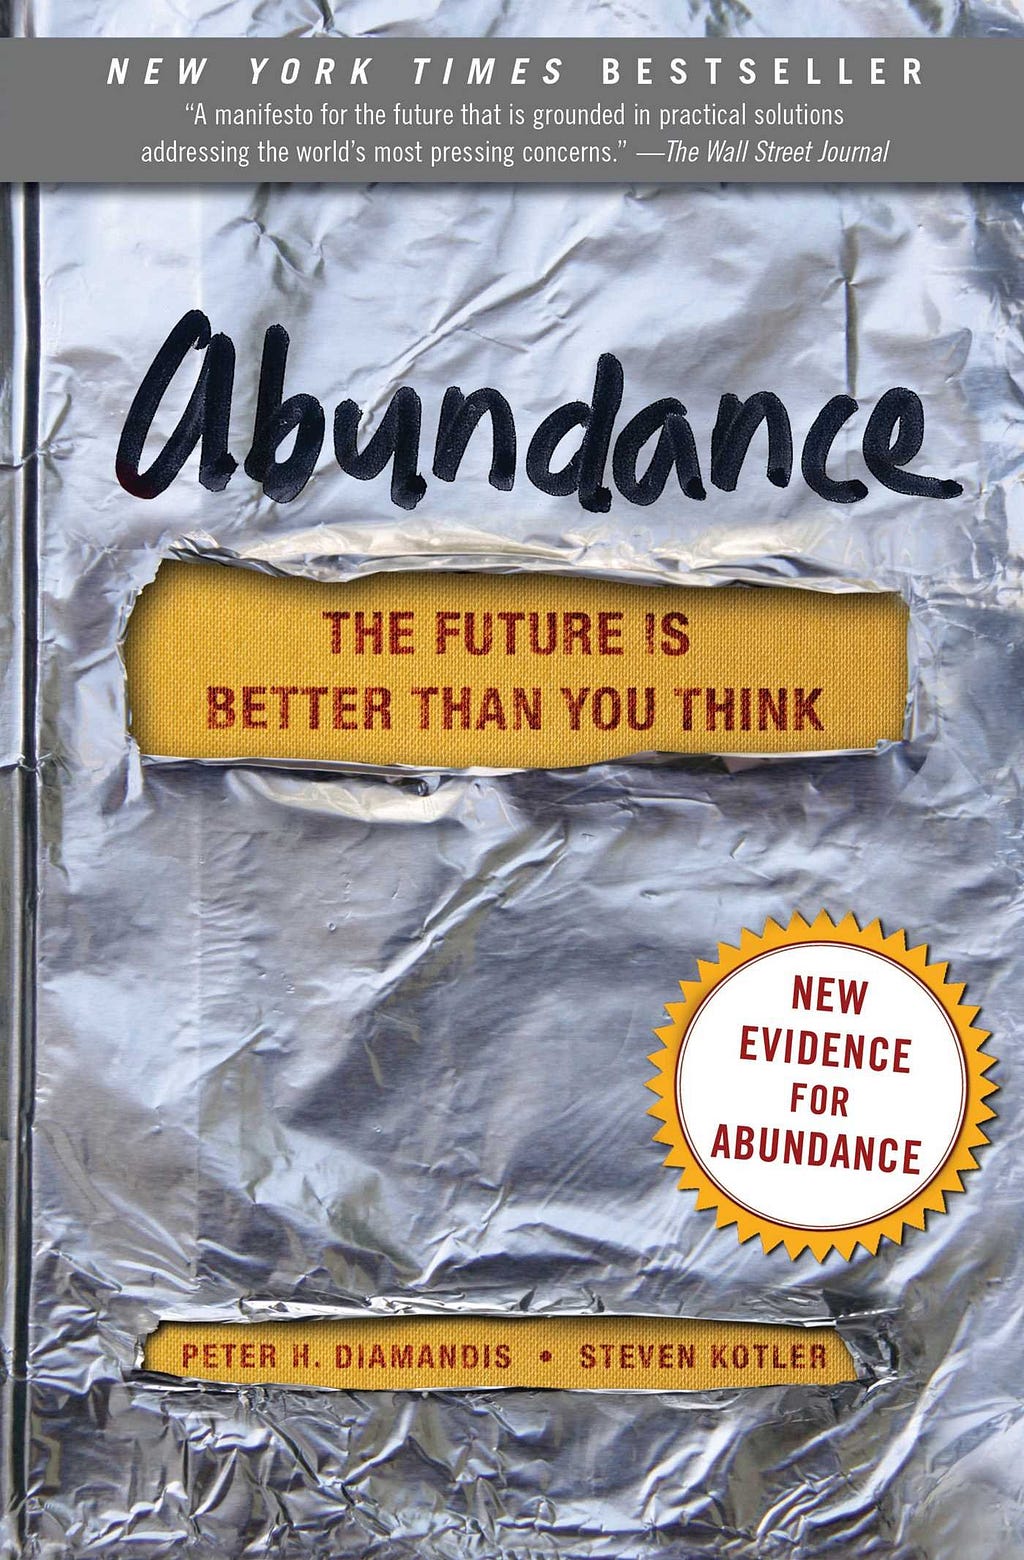 https://www.amazon.com/Abundance-Future-Better-Than-Think/dp/145161683X/ref=sr_1_1?keywords=abundance&qid=1565805199&s=gatewa